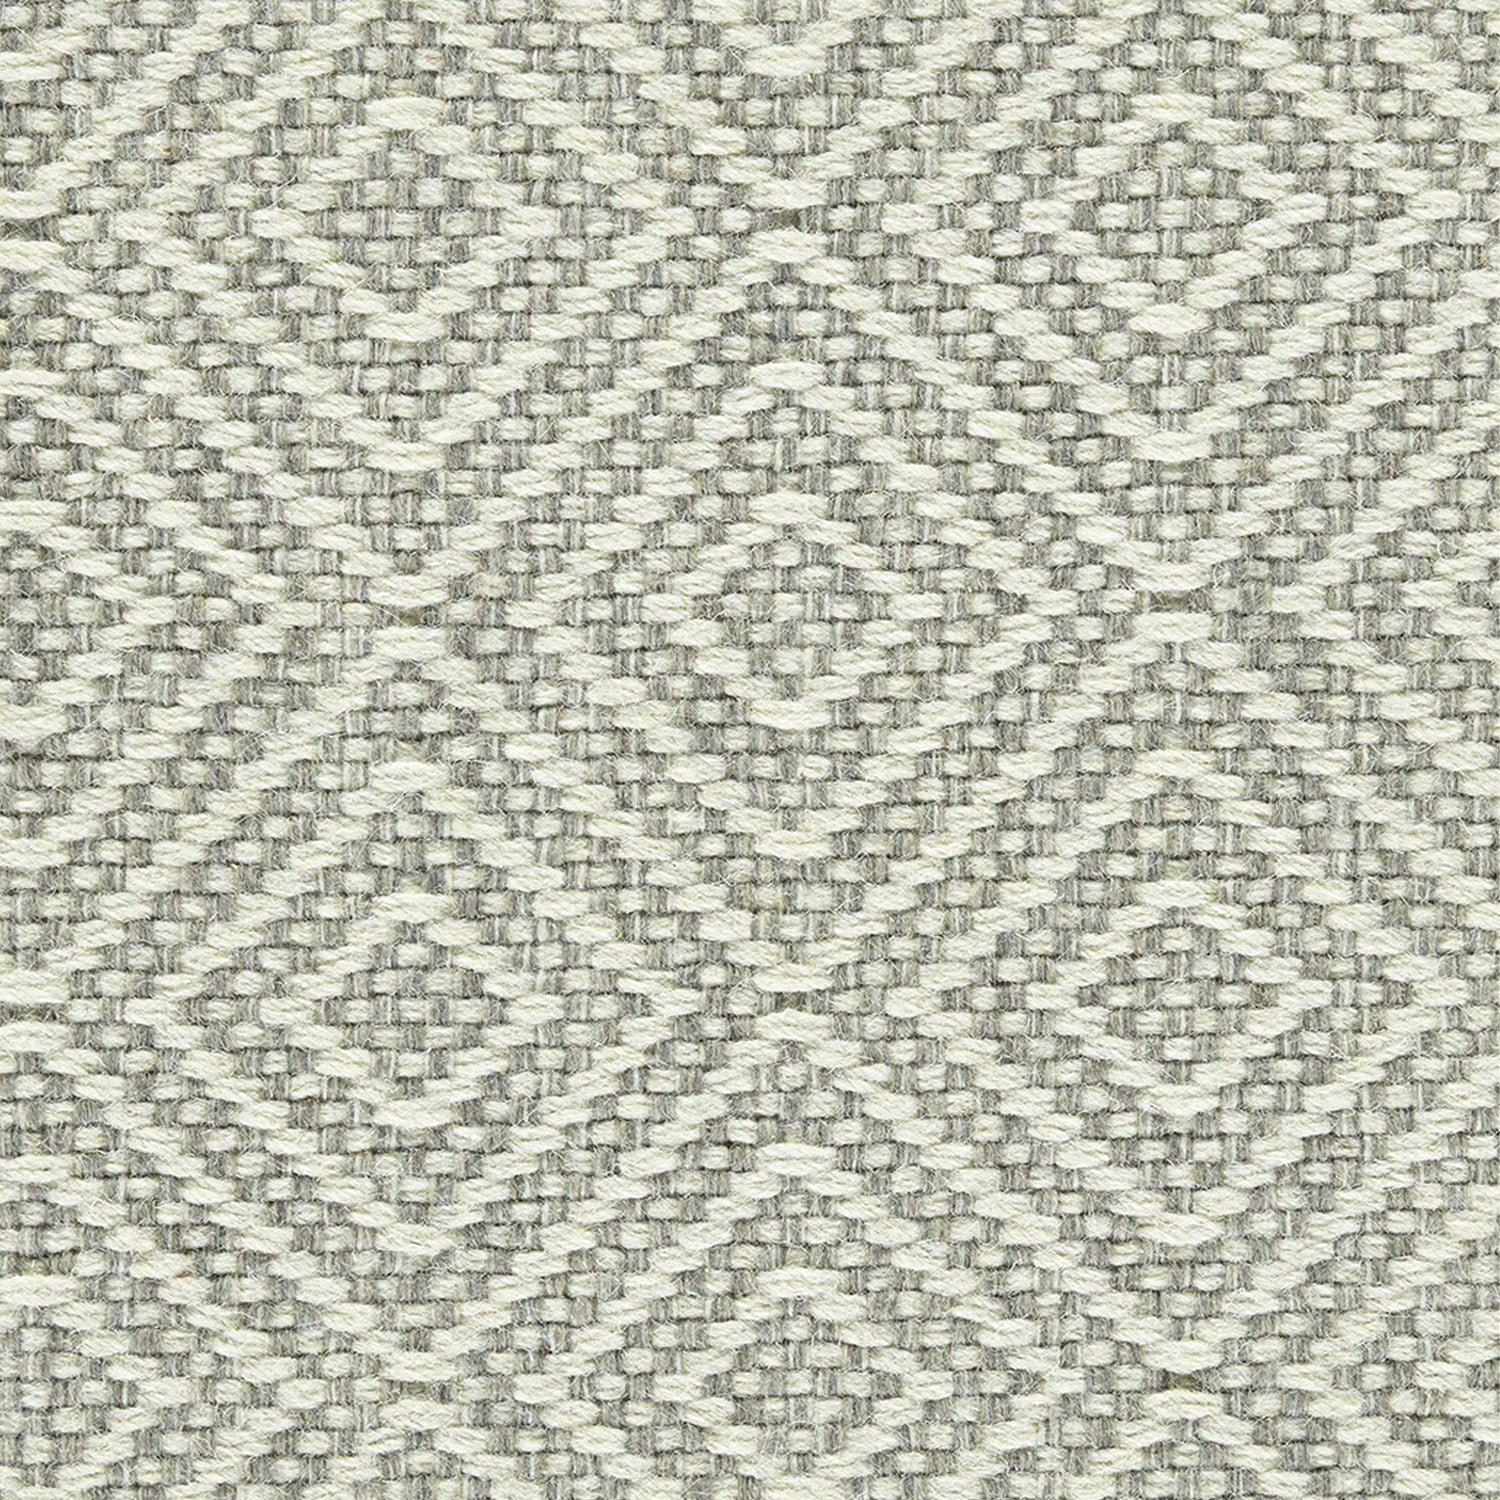 Wool broadloom carpet swatch in a chunky diamond lattice weave in cream and silver.